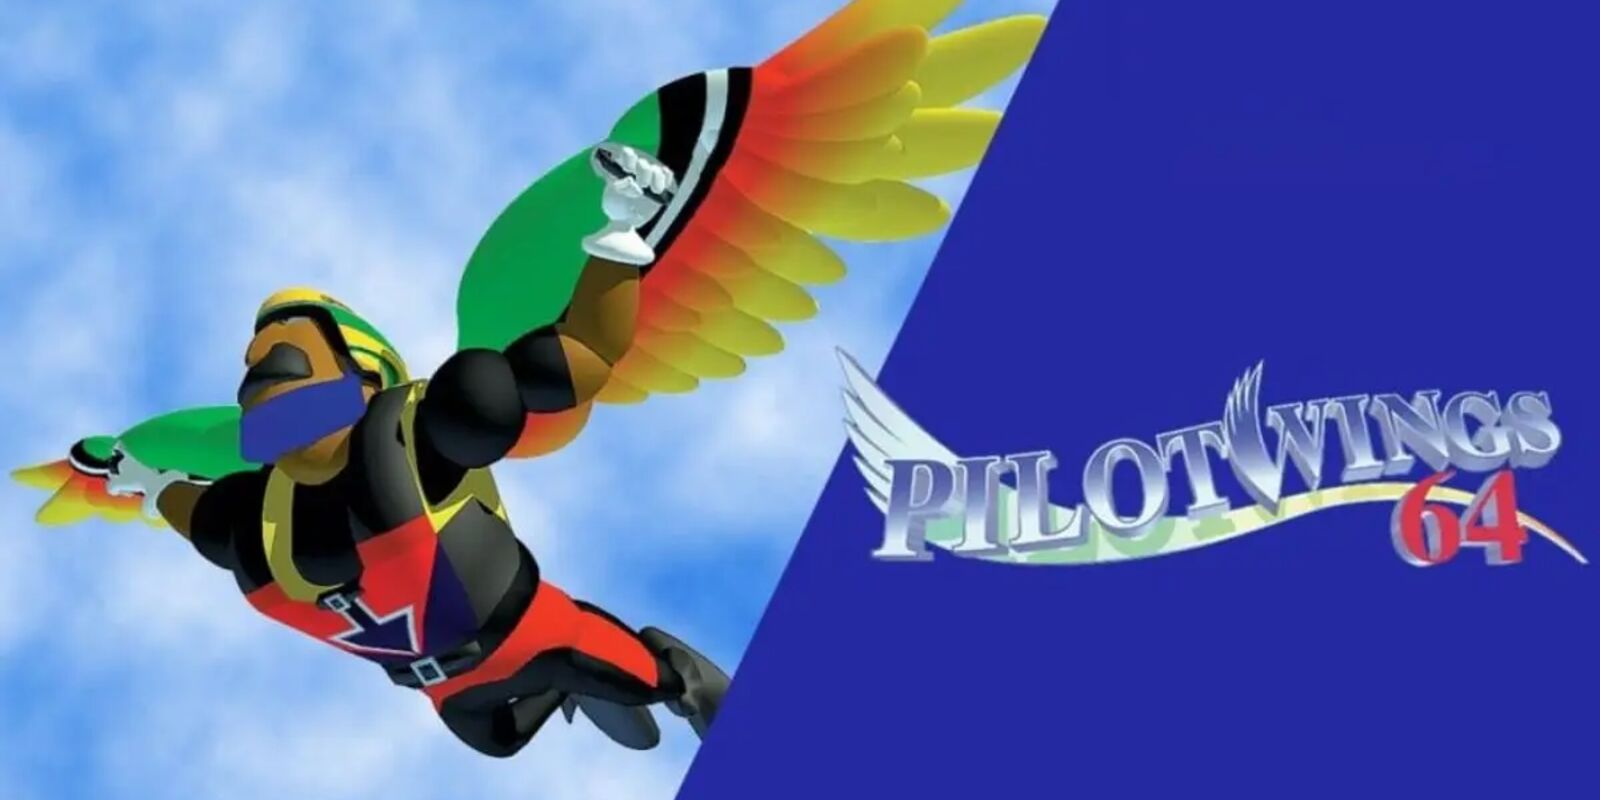 Pilotwings 64 llegará el 13 de octubre para Nintendo Switch Online + Expansion Pack